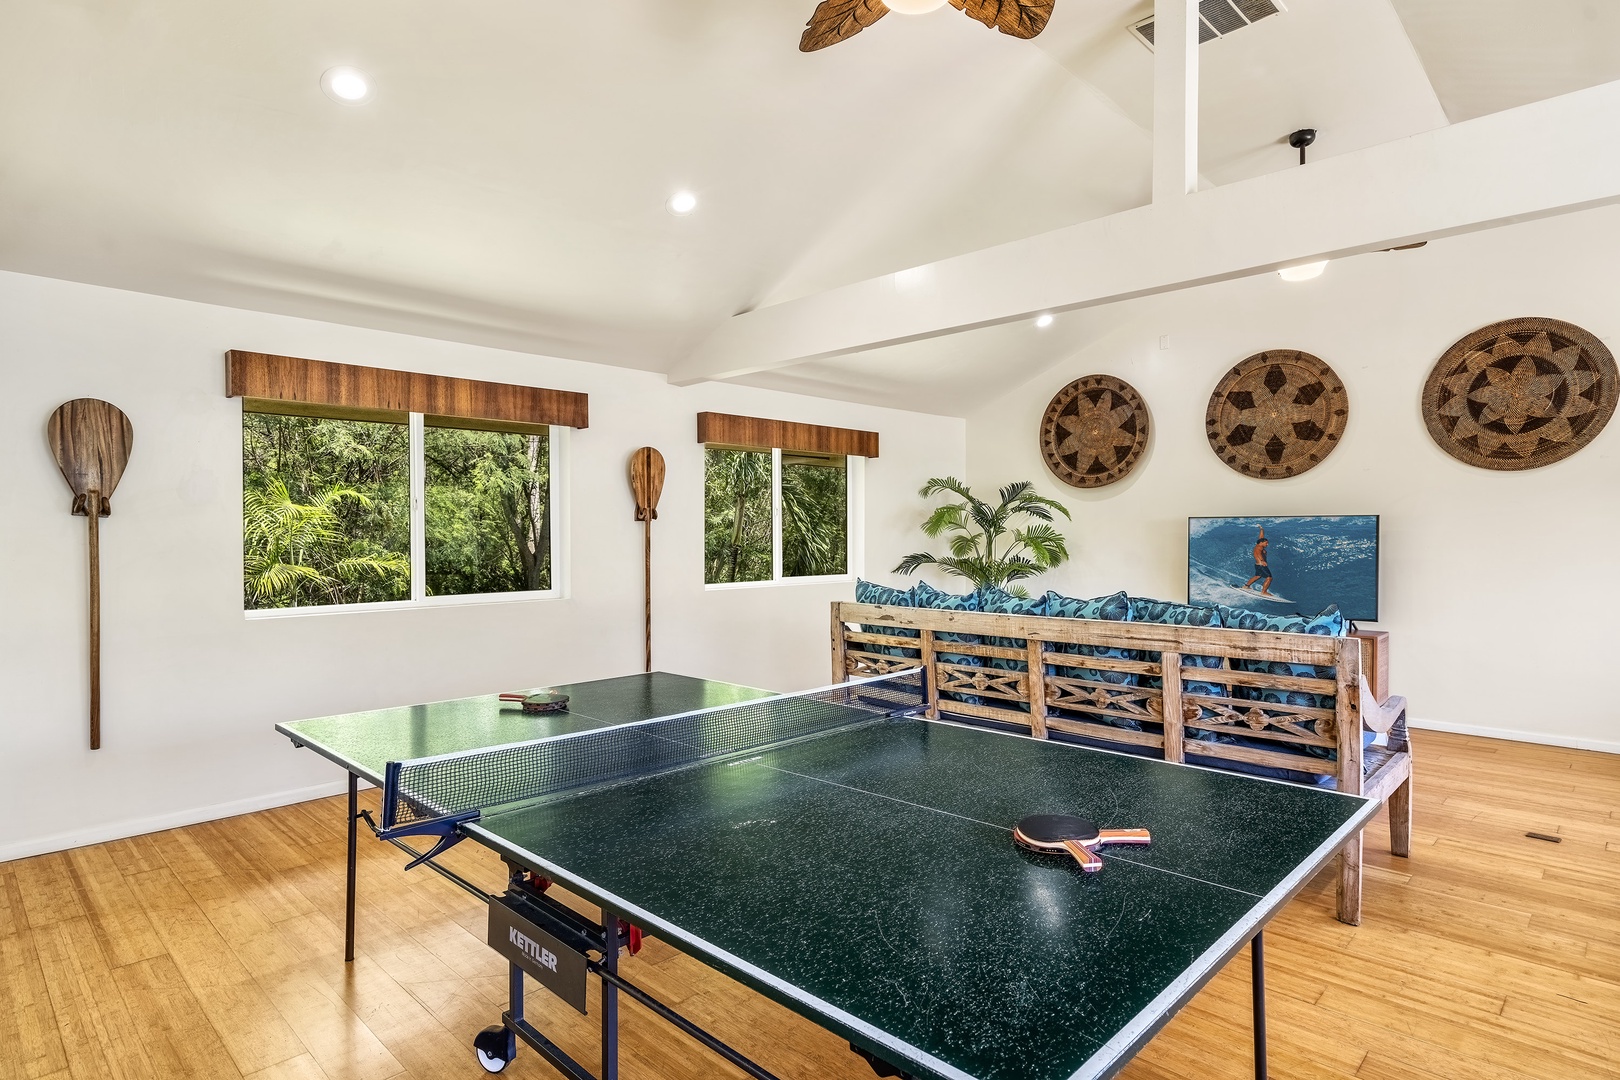 Kailua Kona Vacation Rentals, Lymans Bay Hale - Play a game of ping pong!